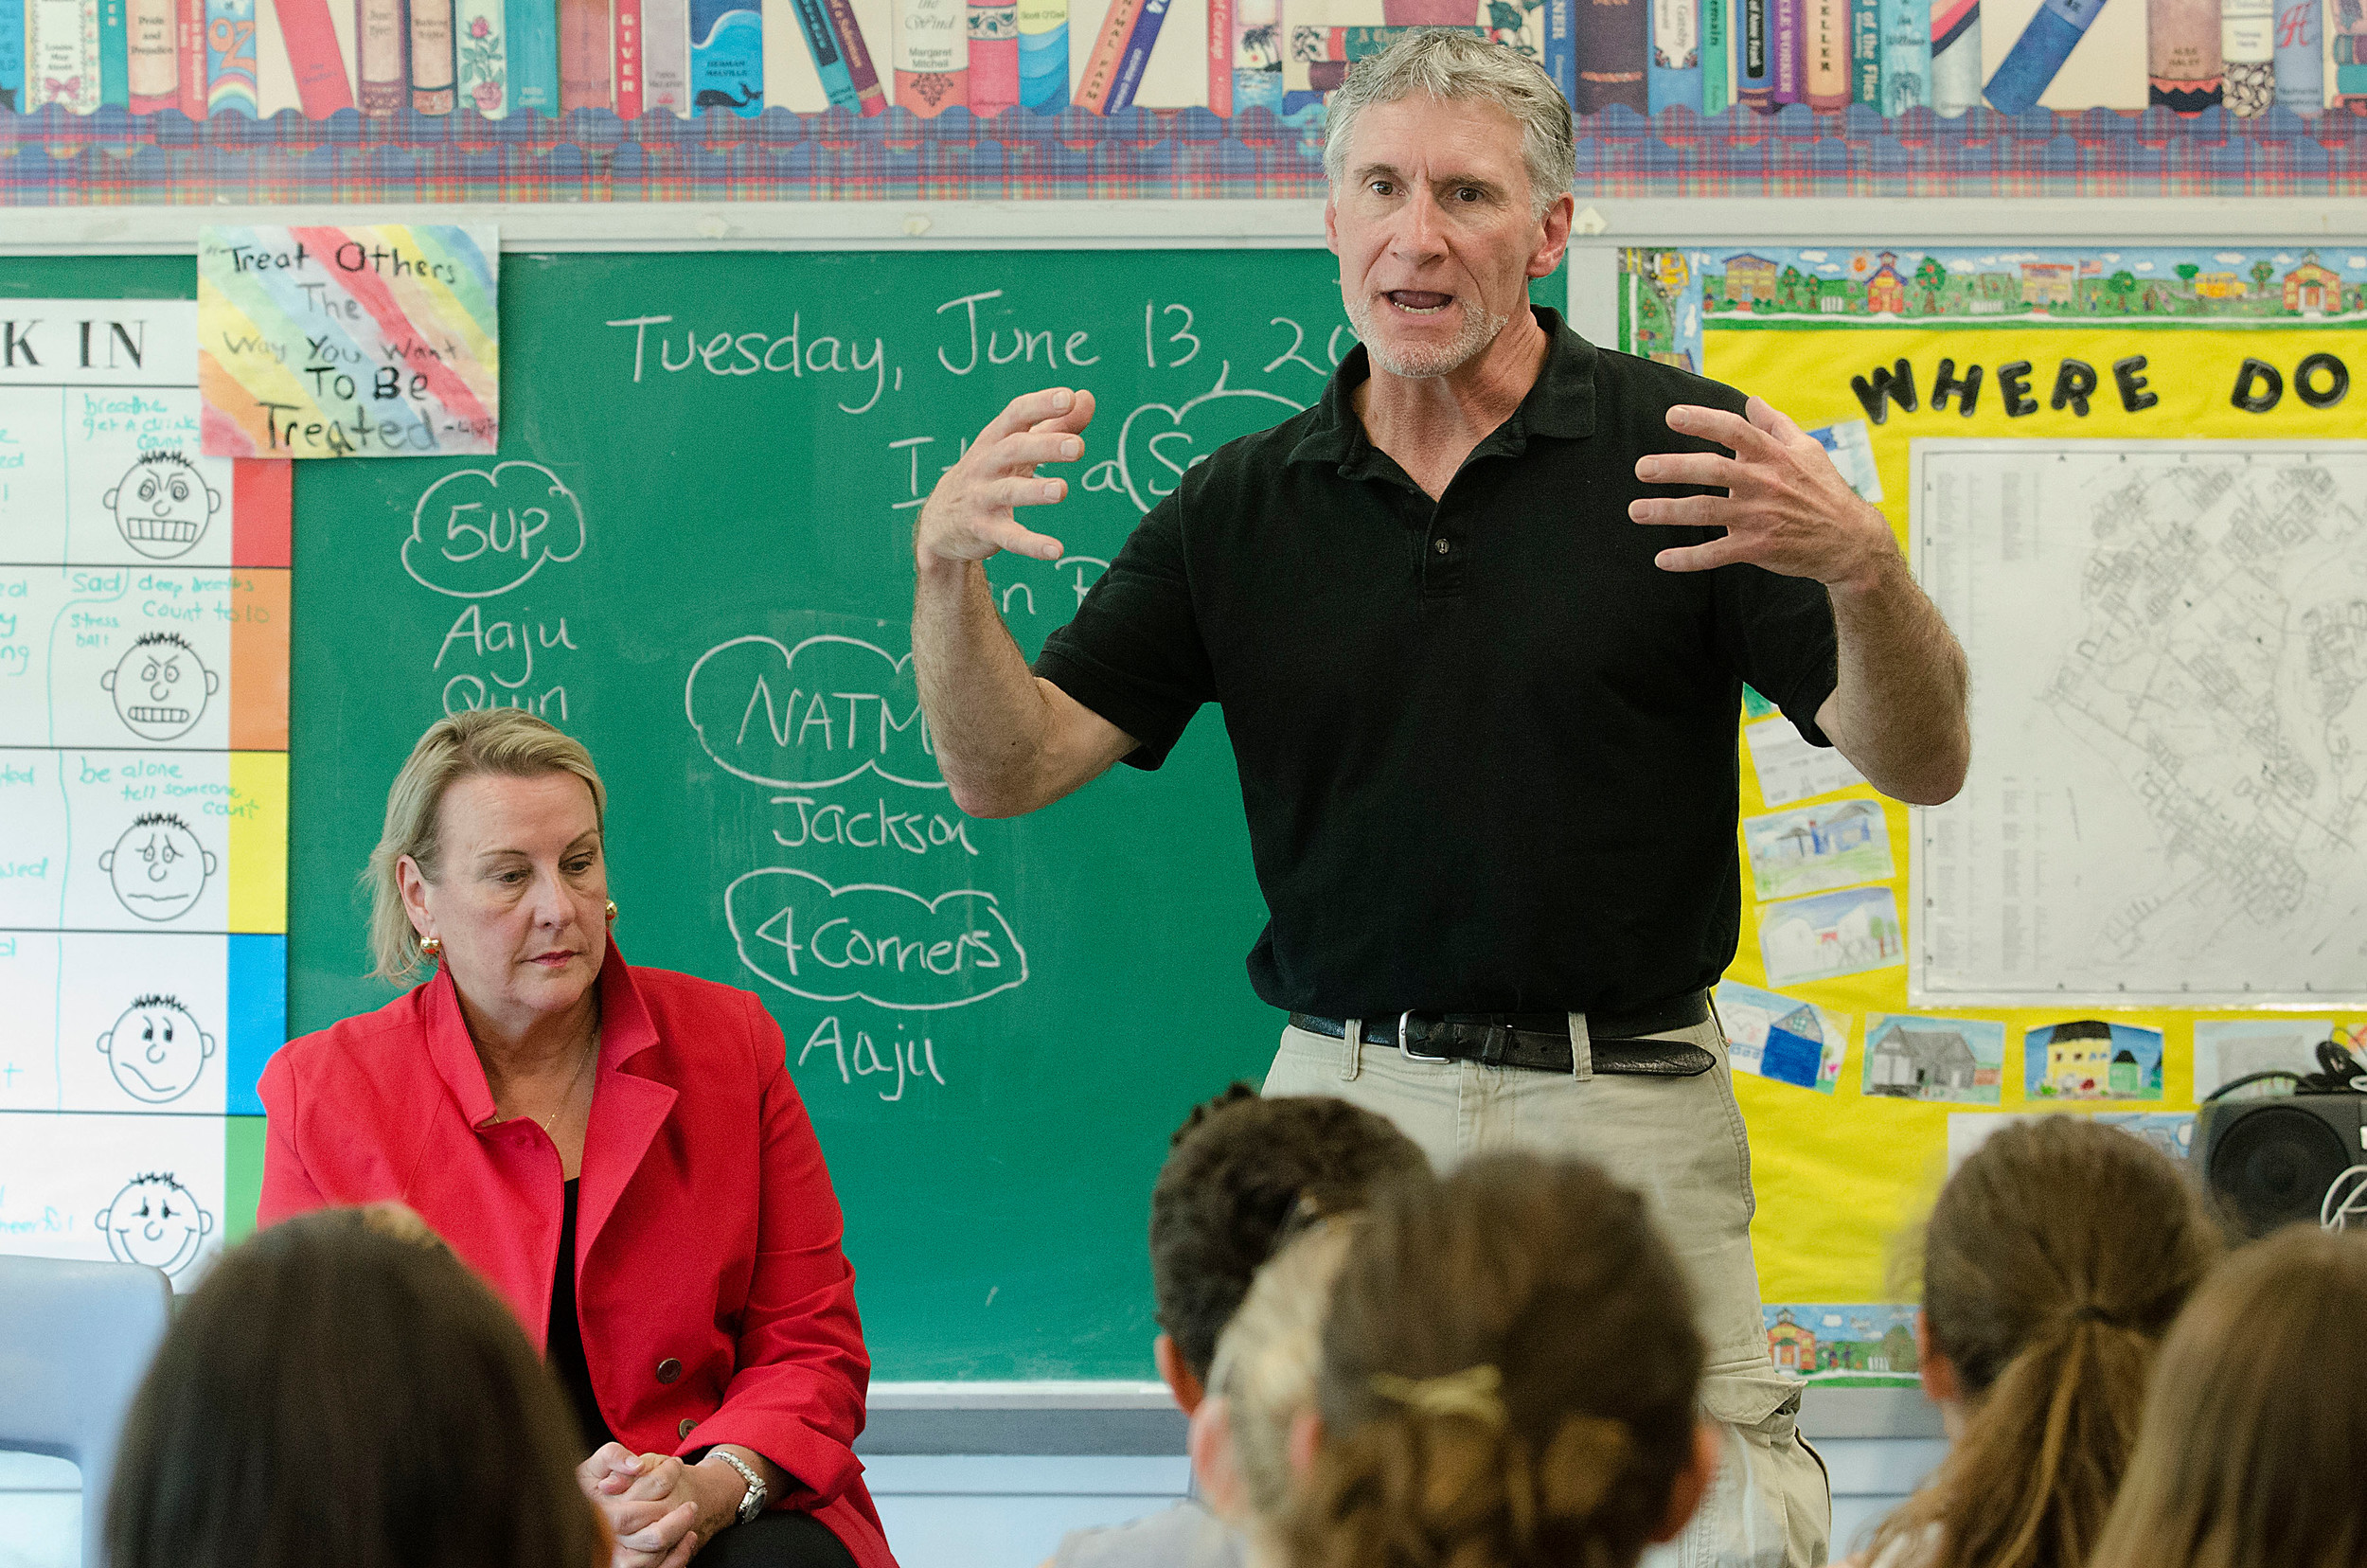 Steve Brosnihan speaks to students at Hampden Meadows School on Tuesday, June 13.